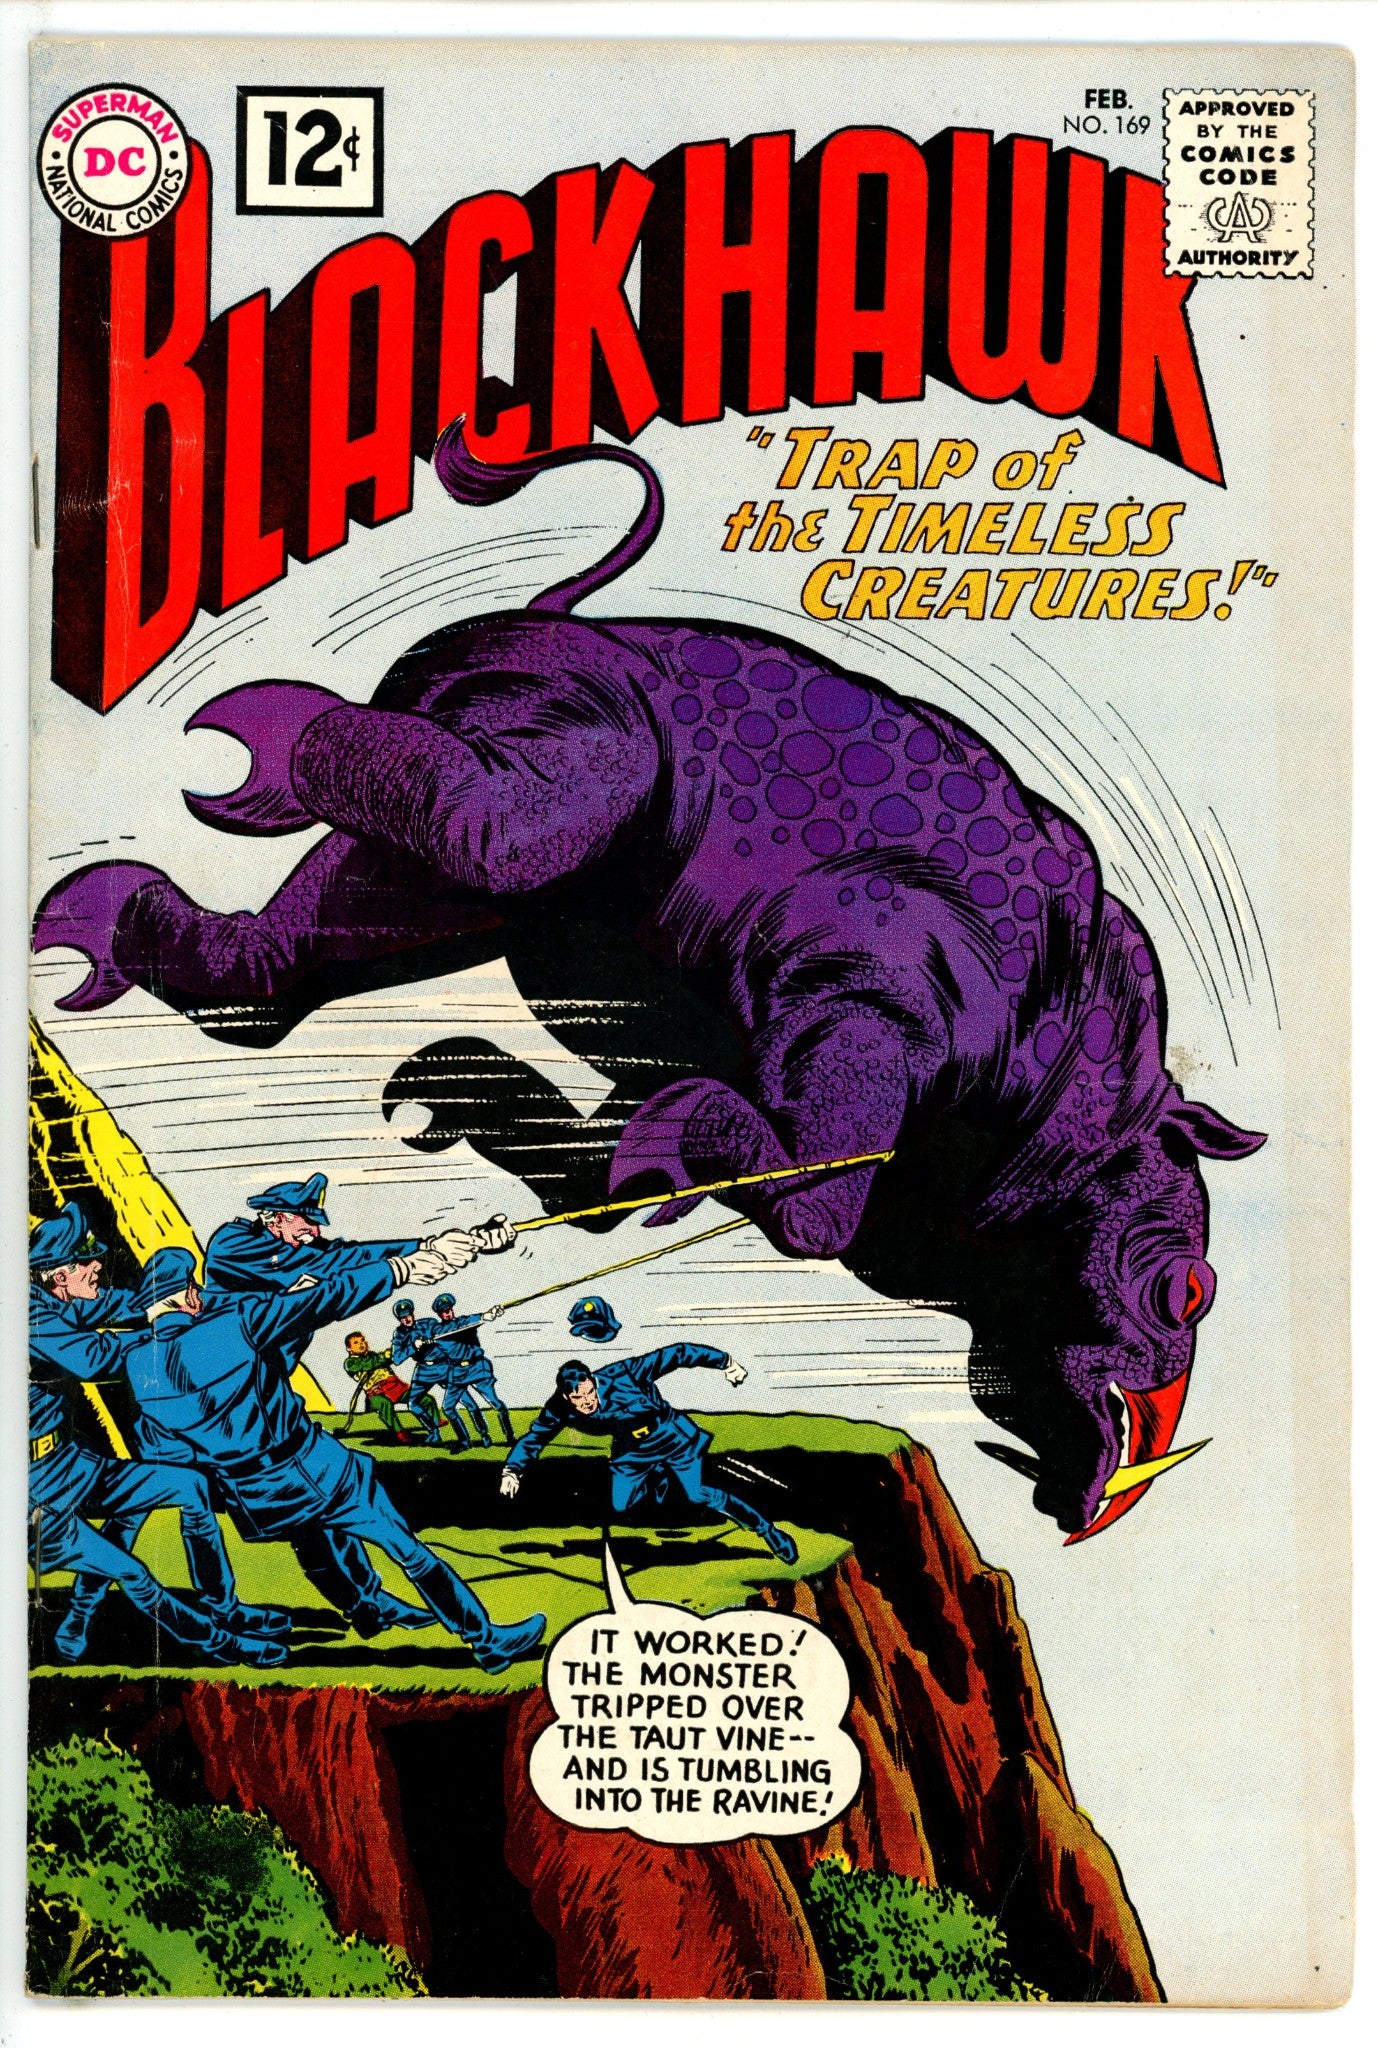 Blackhawk Vol 1 169 VG/FN (5.0) (1962) 